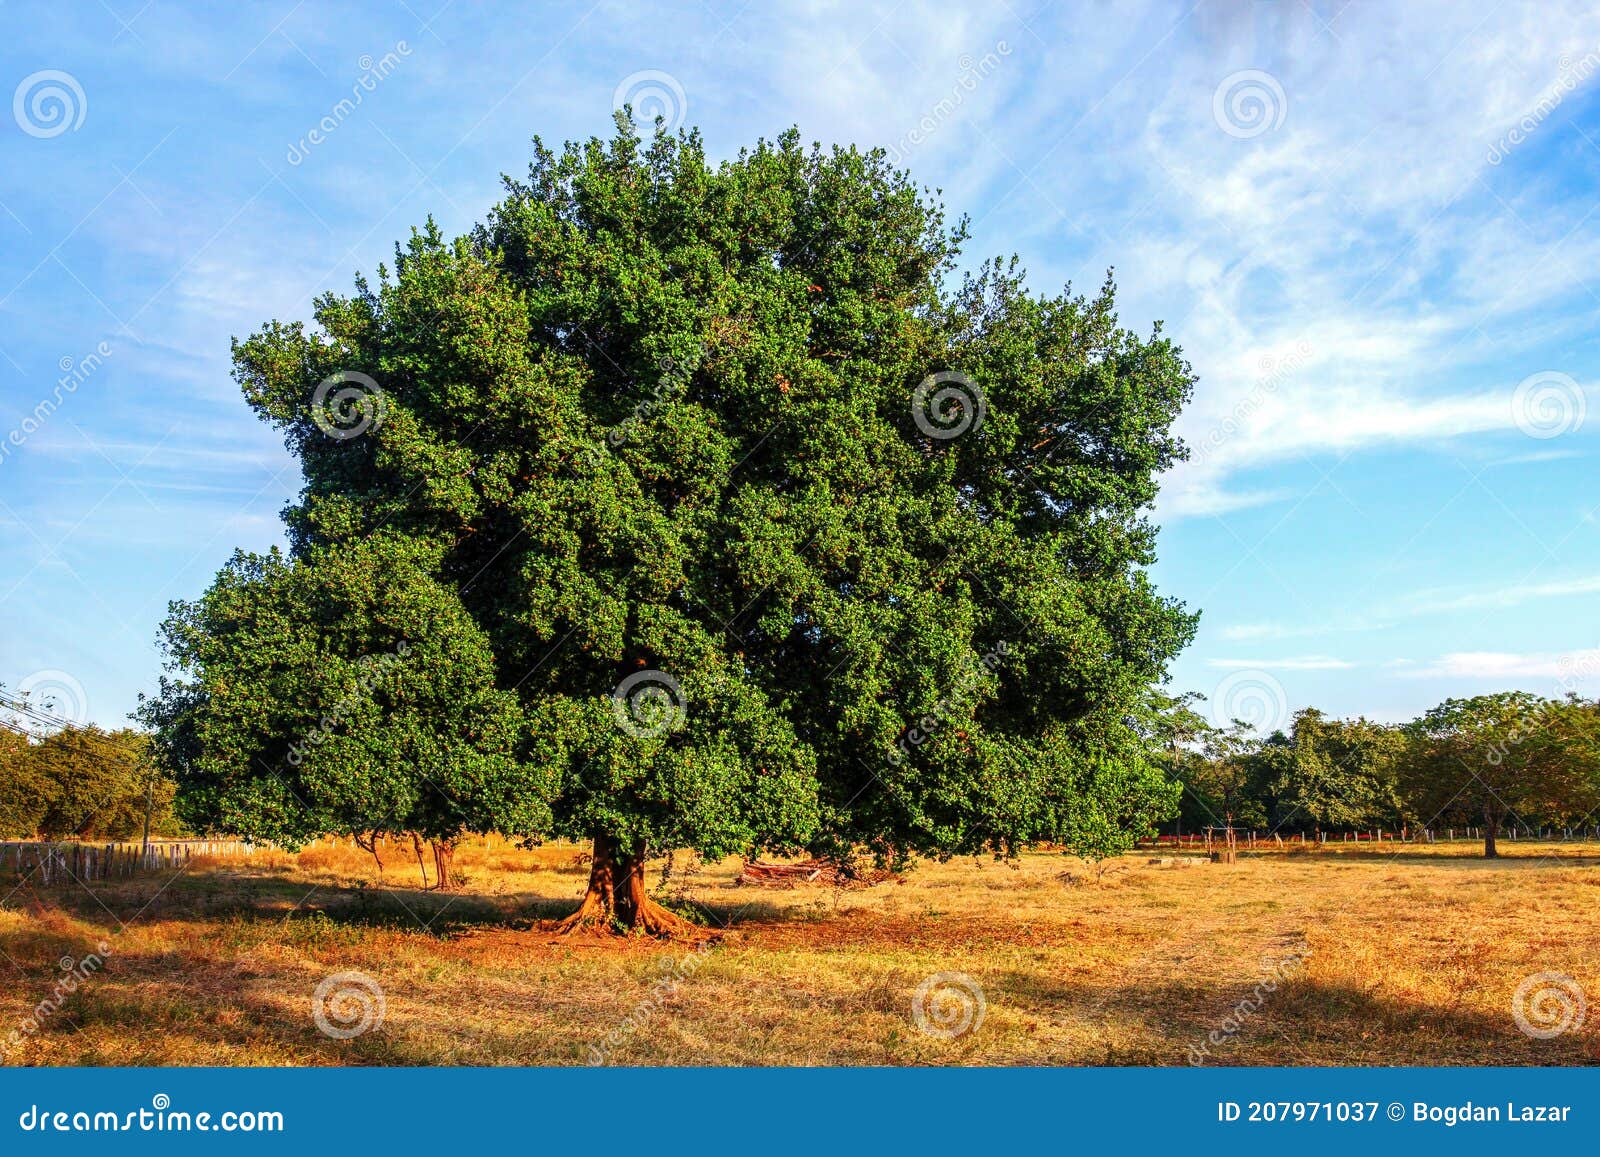 guanacaste tree, costa rica